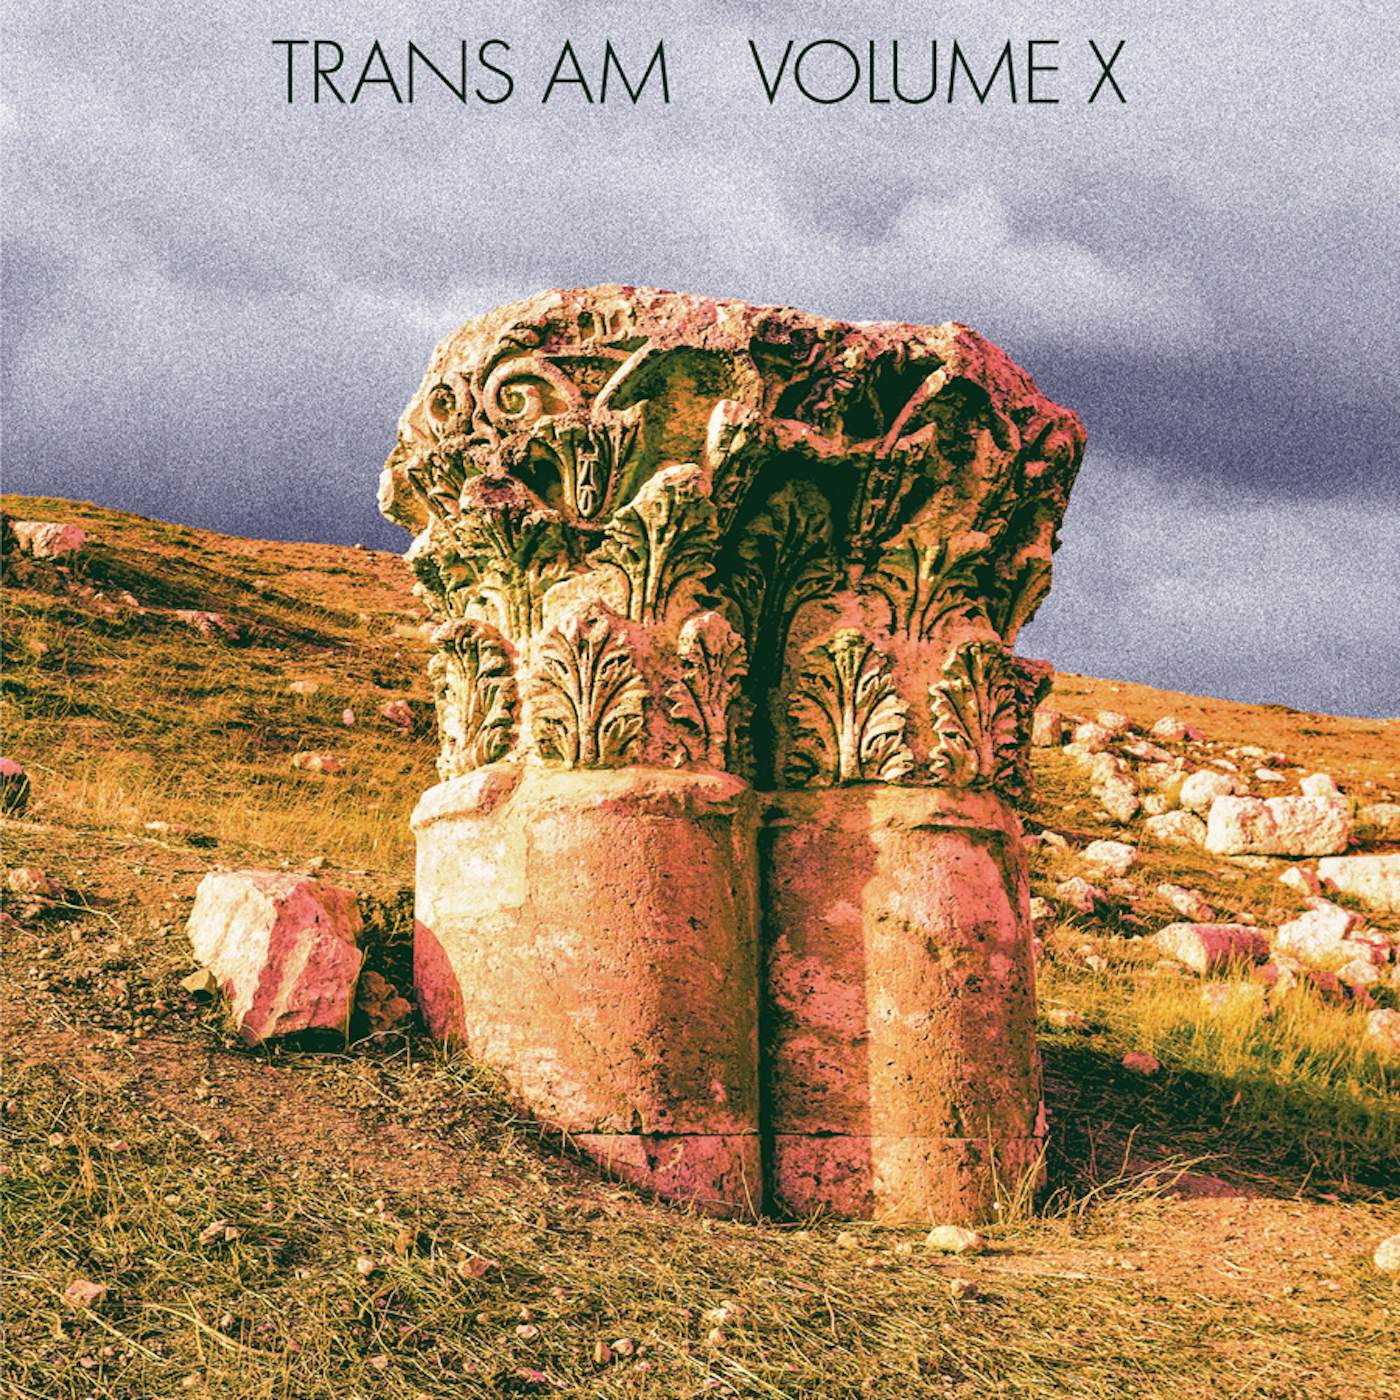 Trans Am VOLUME X CD